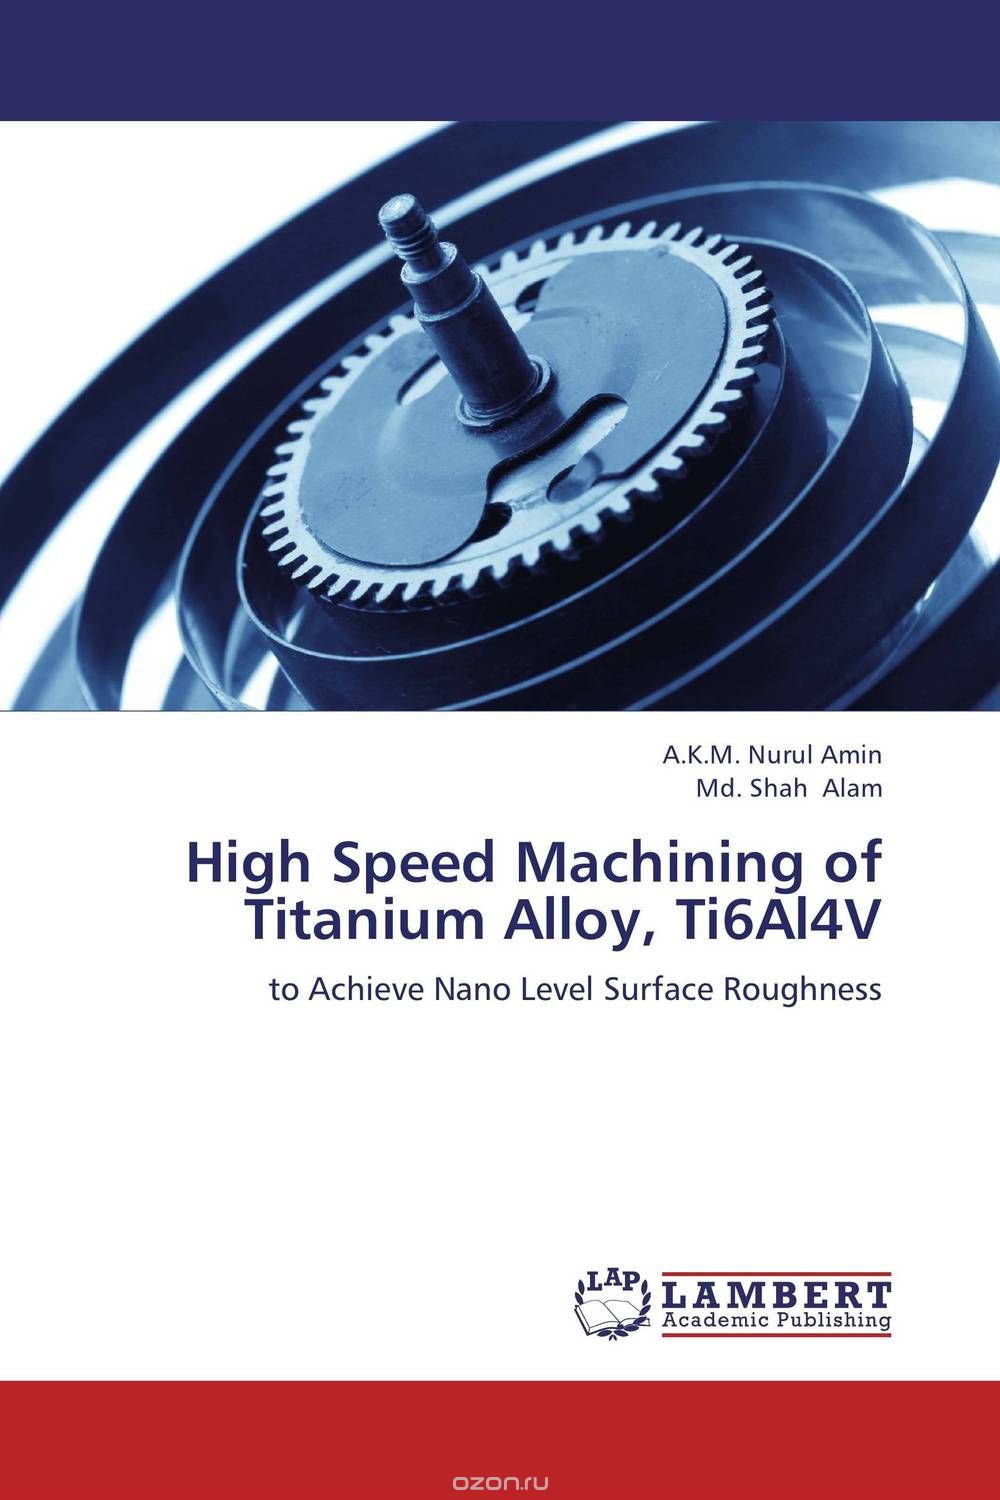 Скачать книгу "High Speed Machining of Titanium Alloy, Ti6Al4V"